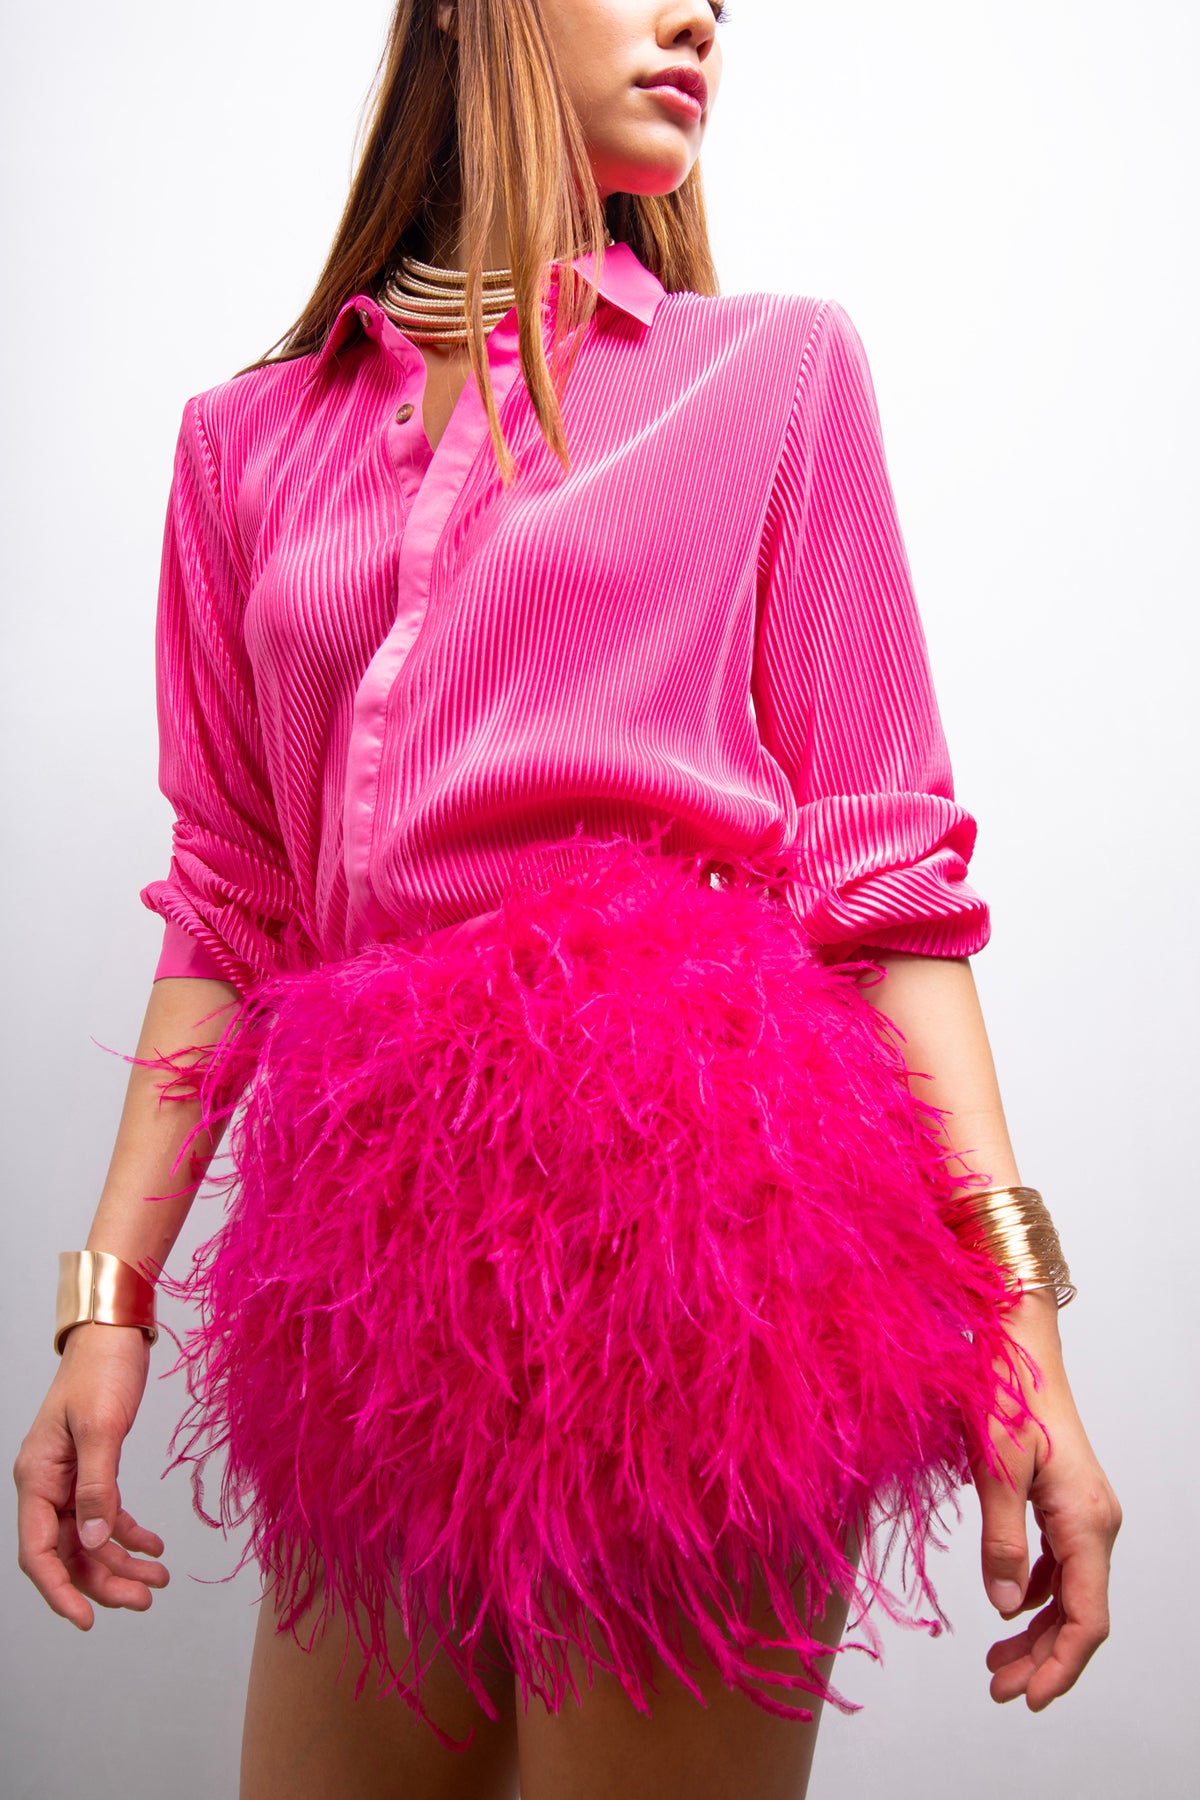 Starburst feather skirt in Pink